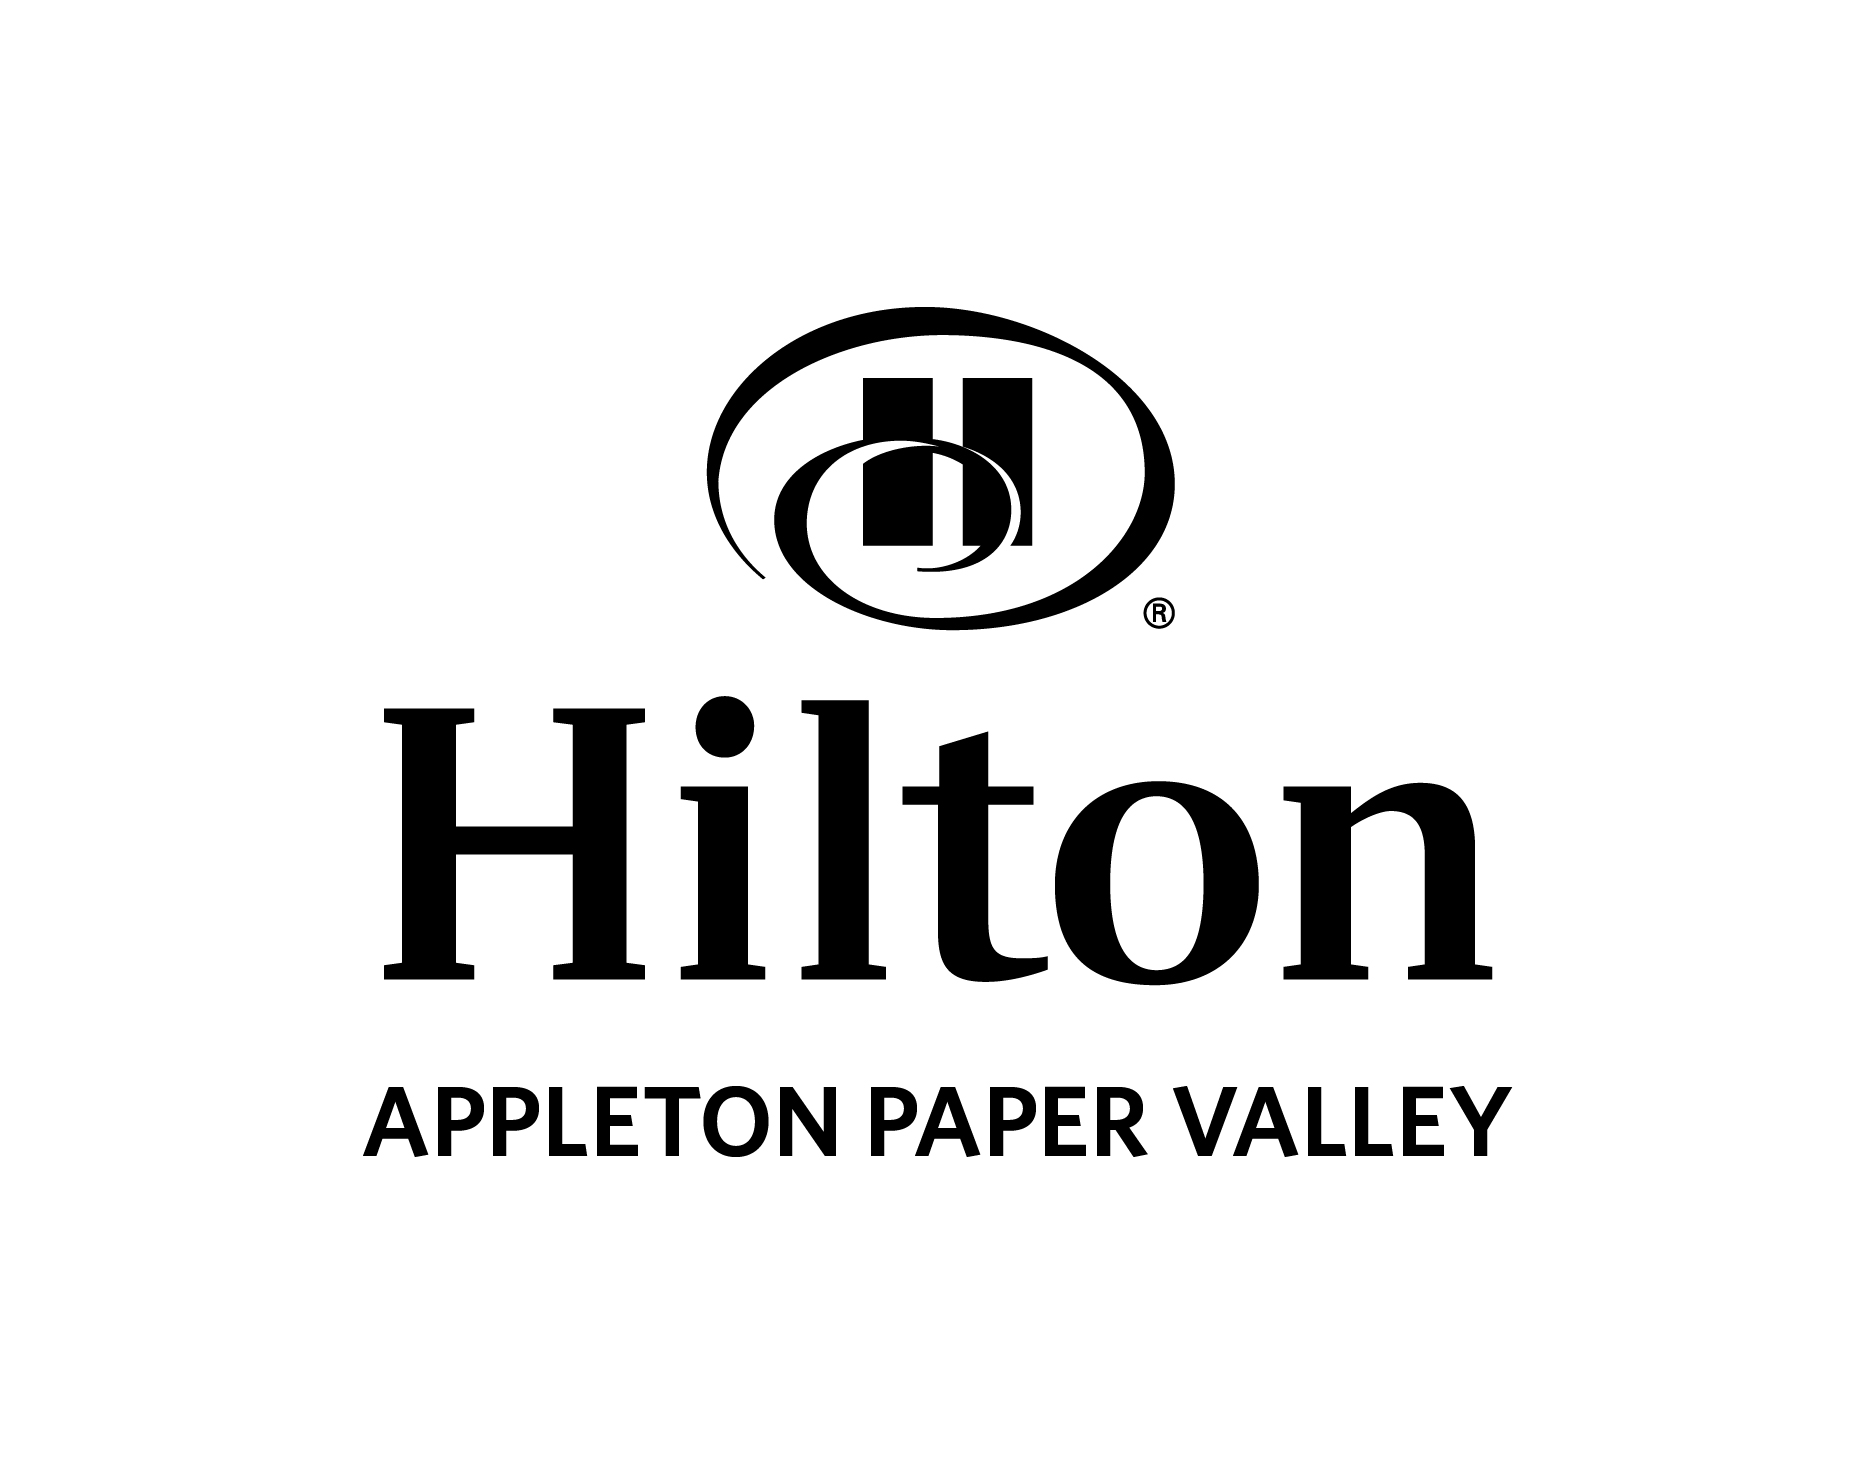 Hilton Appleton Paper Valley